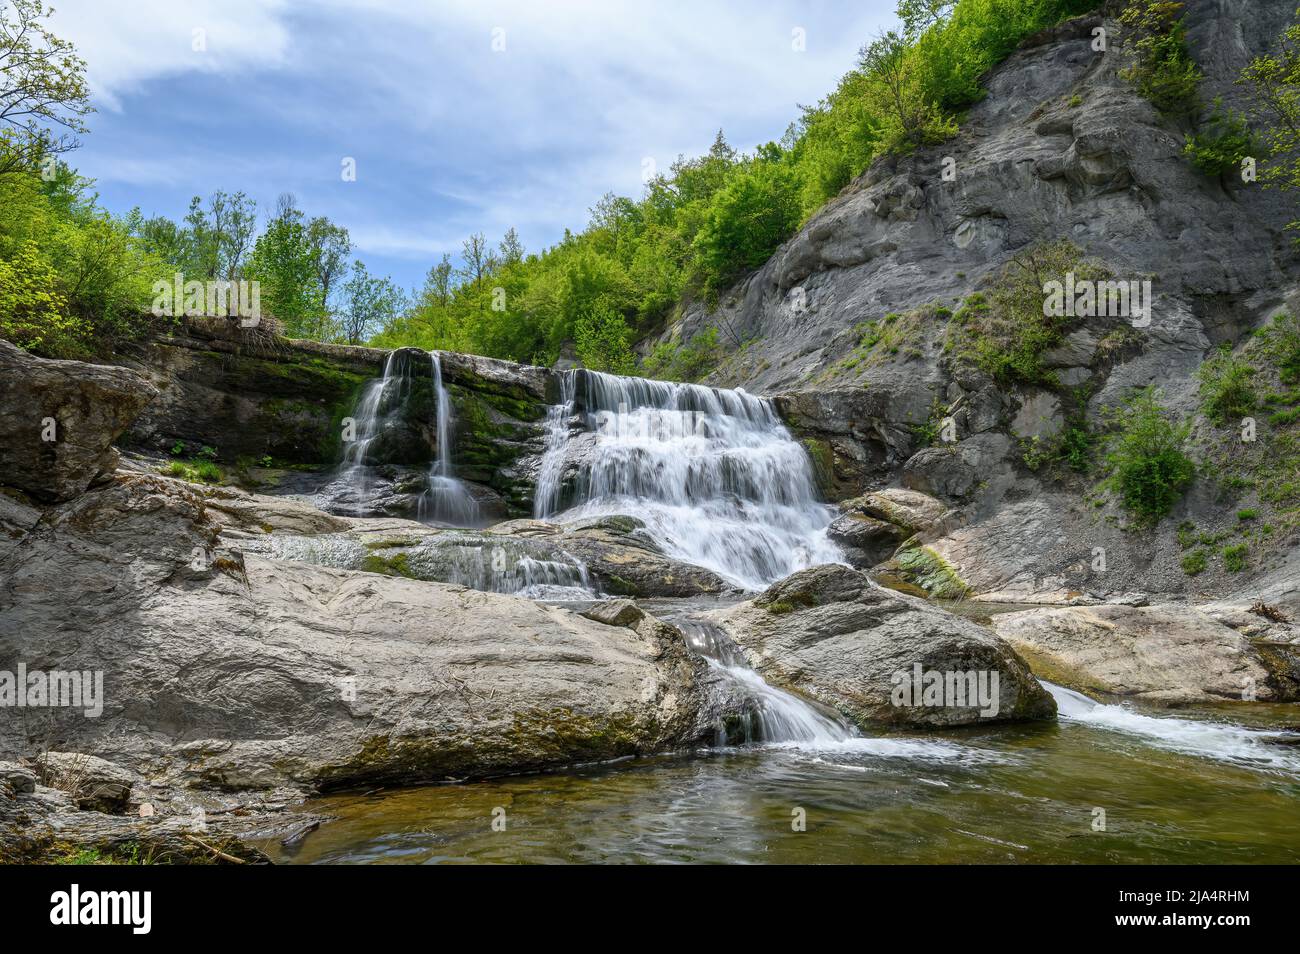 Hristovski Waterfall in Stara Planina mountain in Bulgaria in the area of the Ruhovtsi village on the river Miikovska. Stock Photo